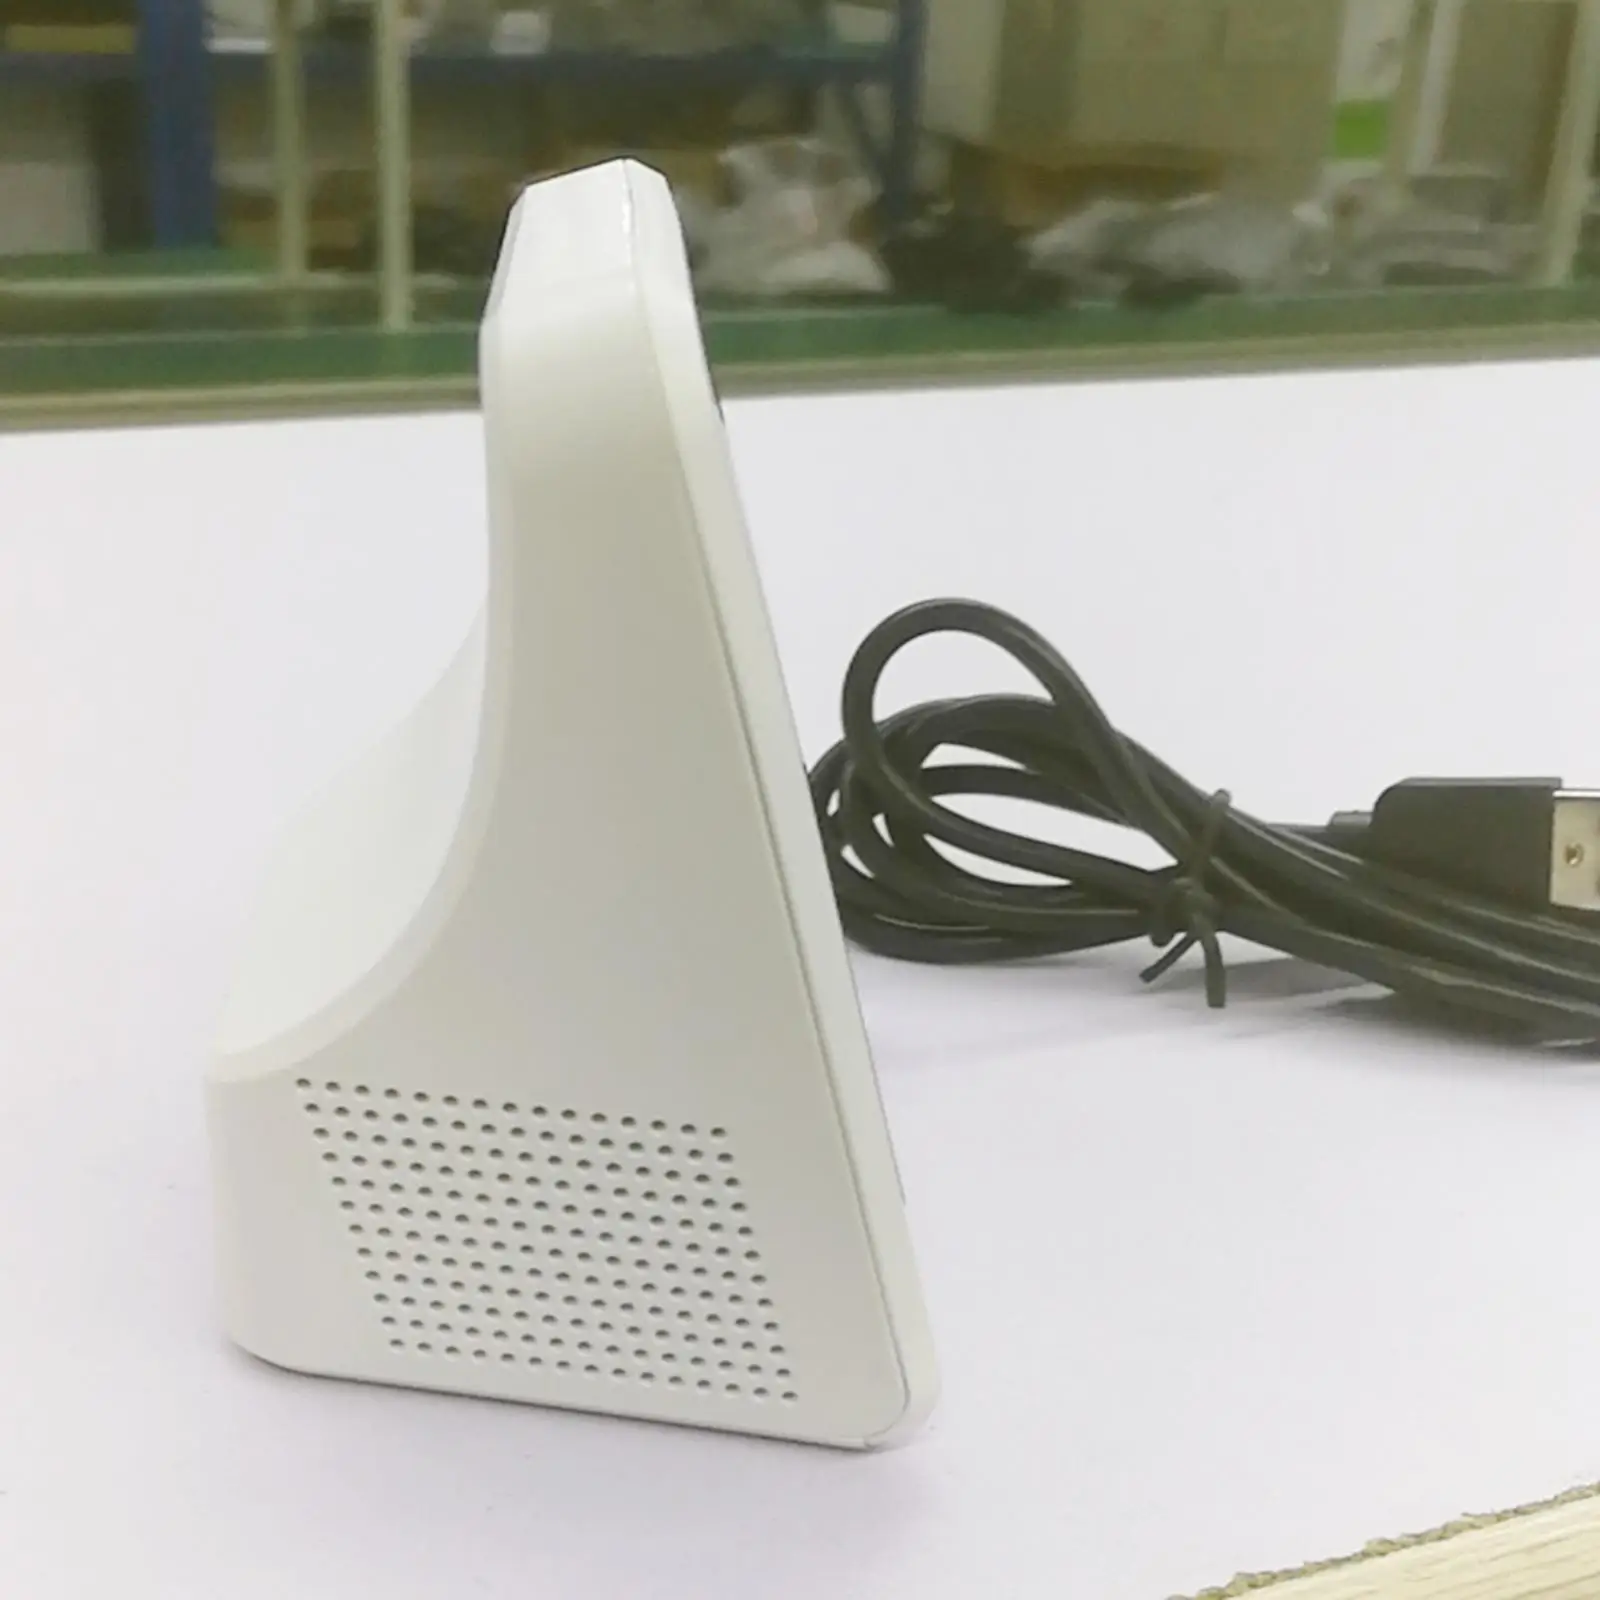 Accurate Air Quality Monitor USB CO2 Meter Detector Checker Alertor Sensor